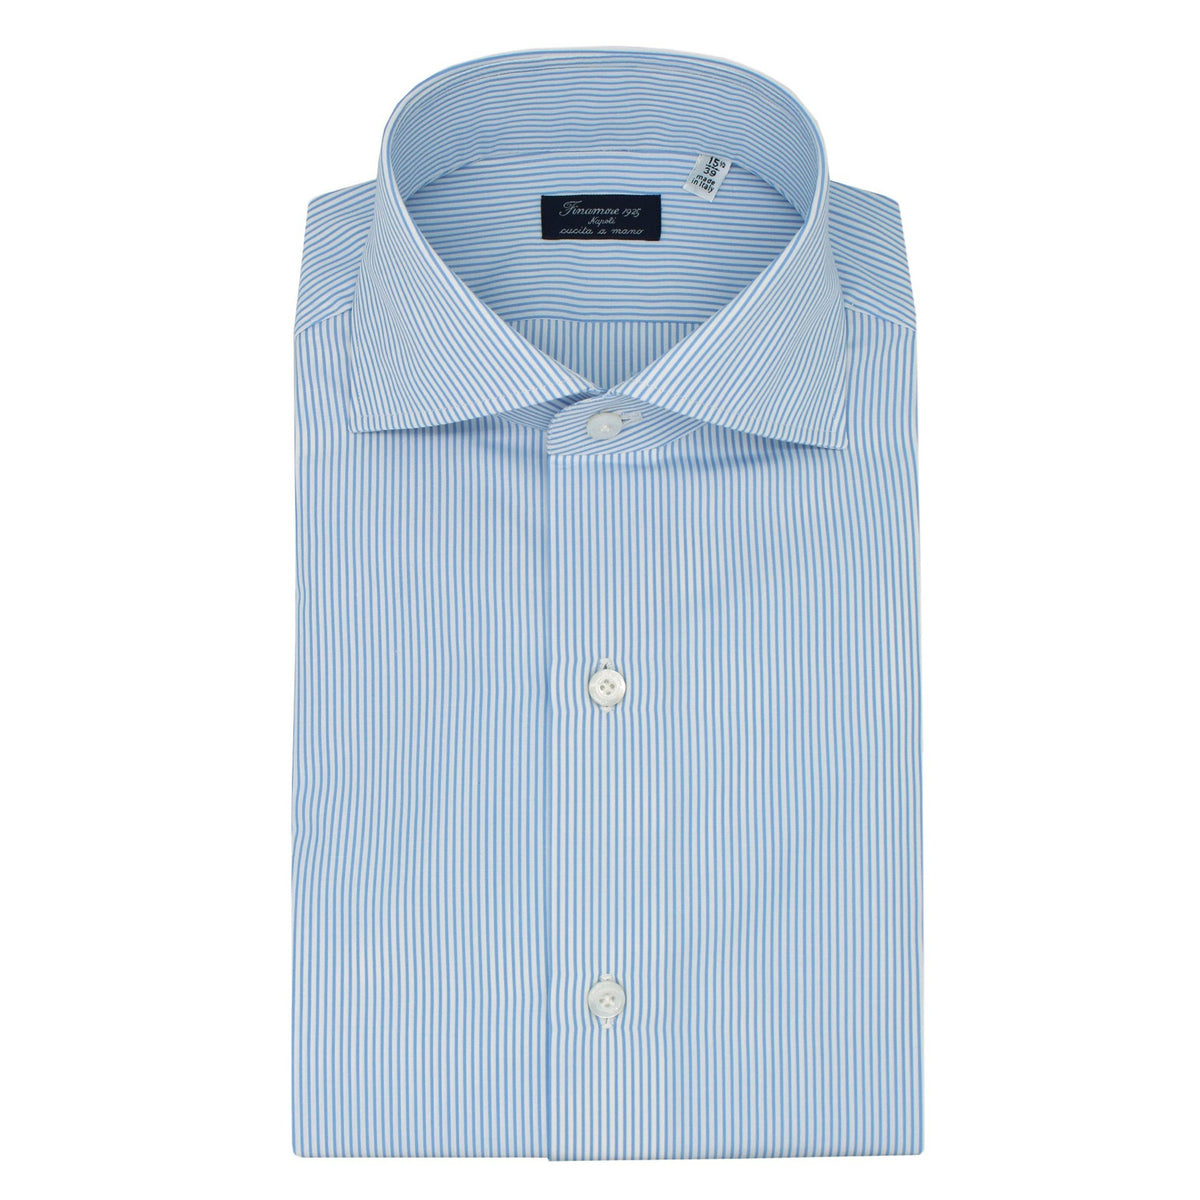 Classic fit Napoli cotton shirt white bottom striped light blue